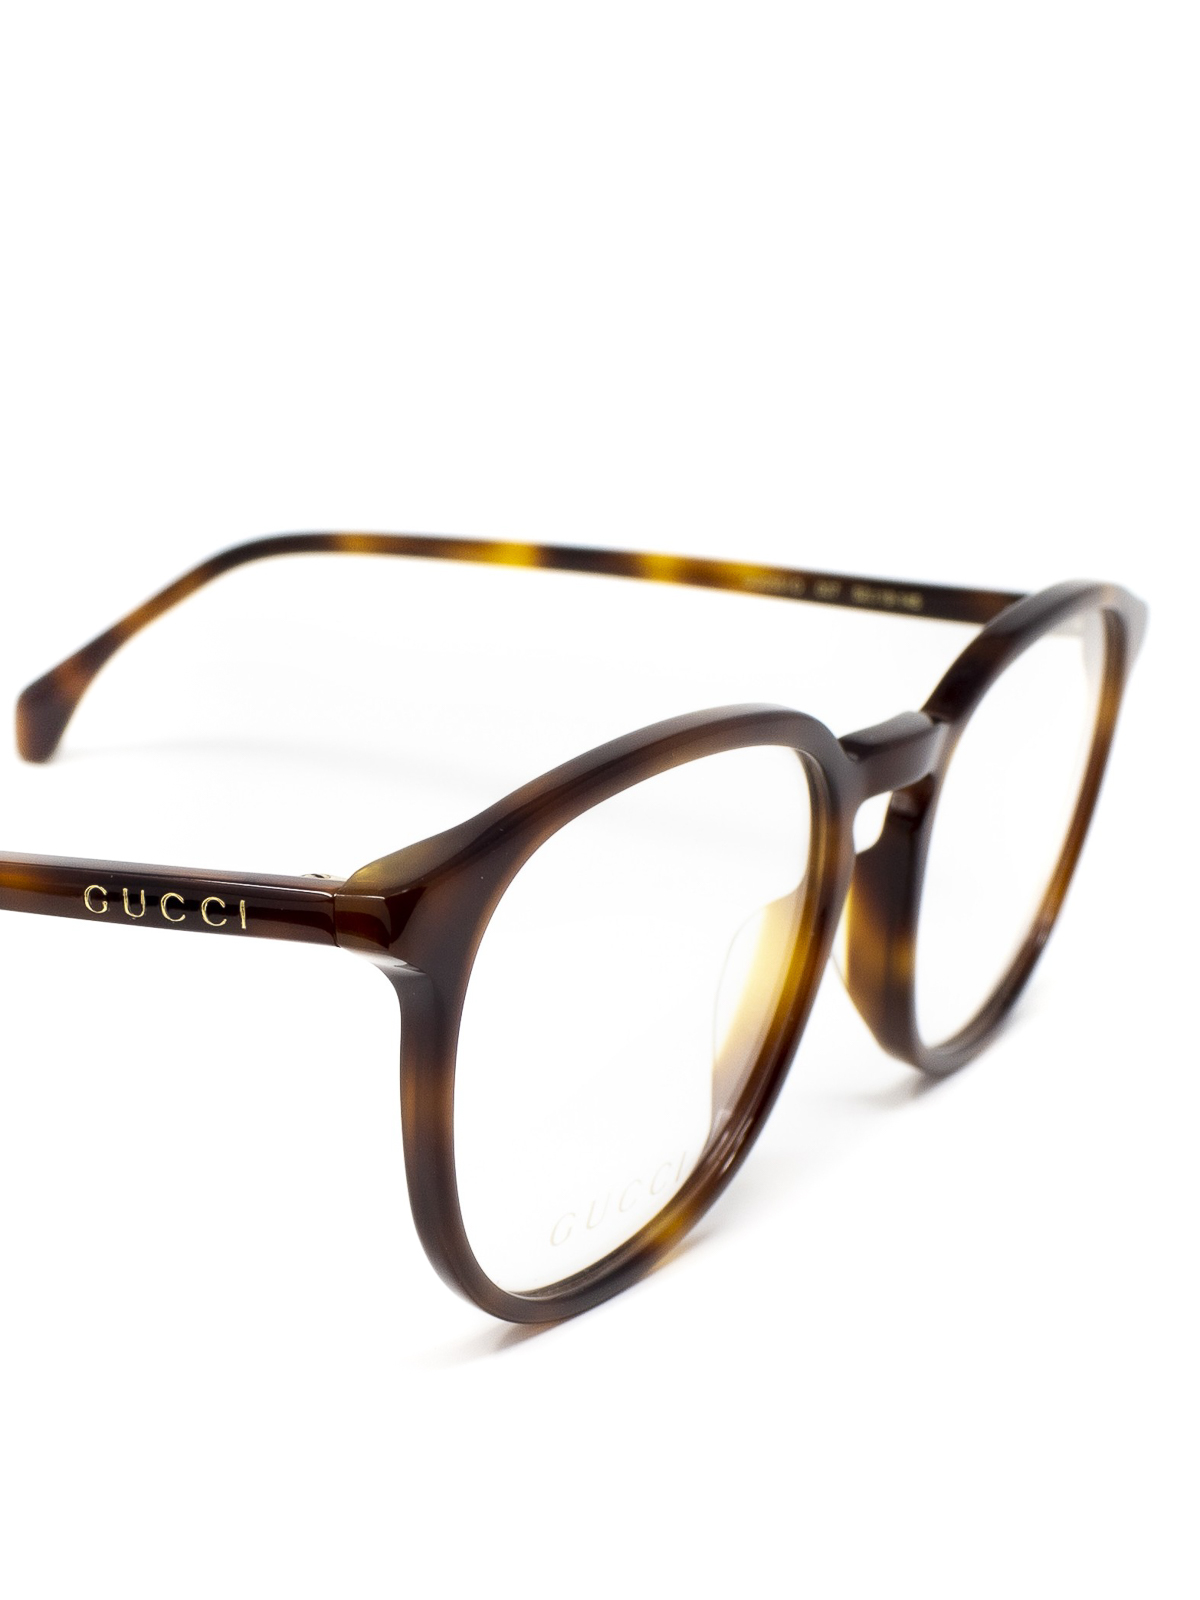 Gucci - Tortoise acetate eyeglasses 